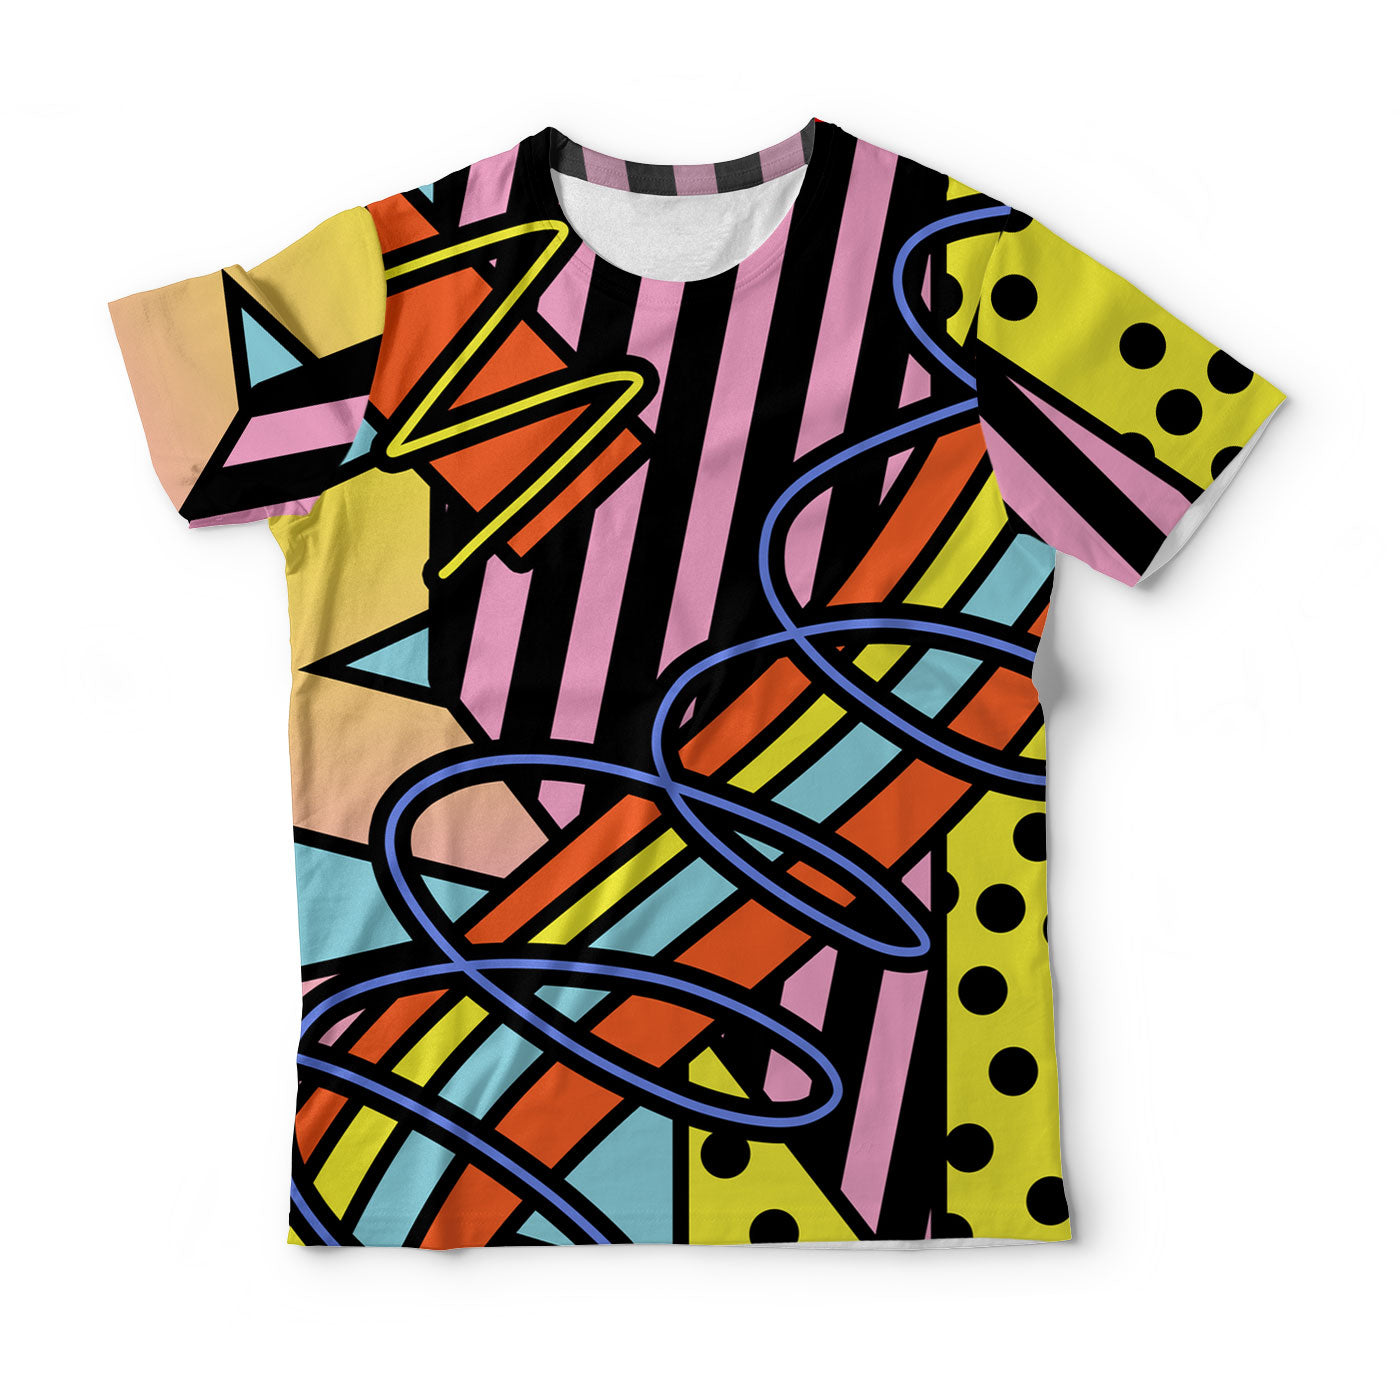 Deconstructive Geometry T-Shirt